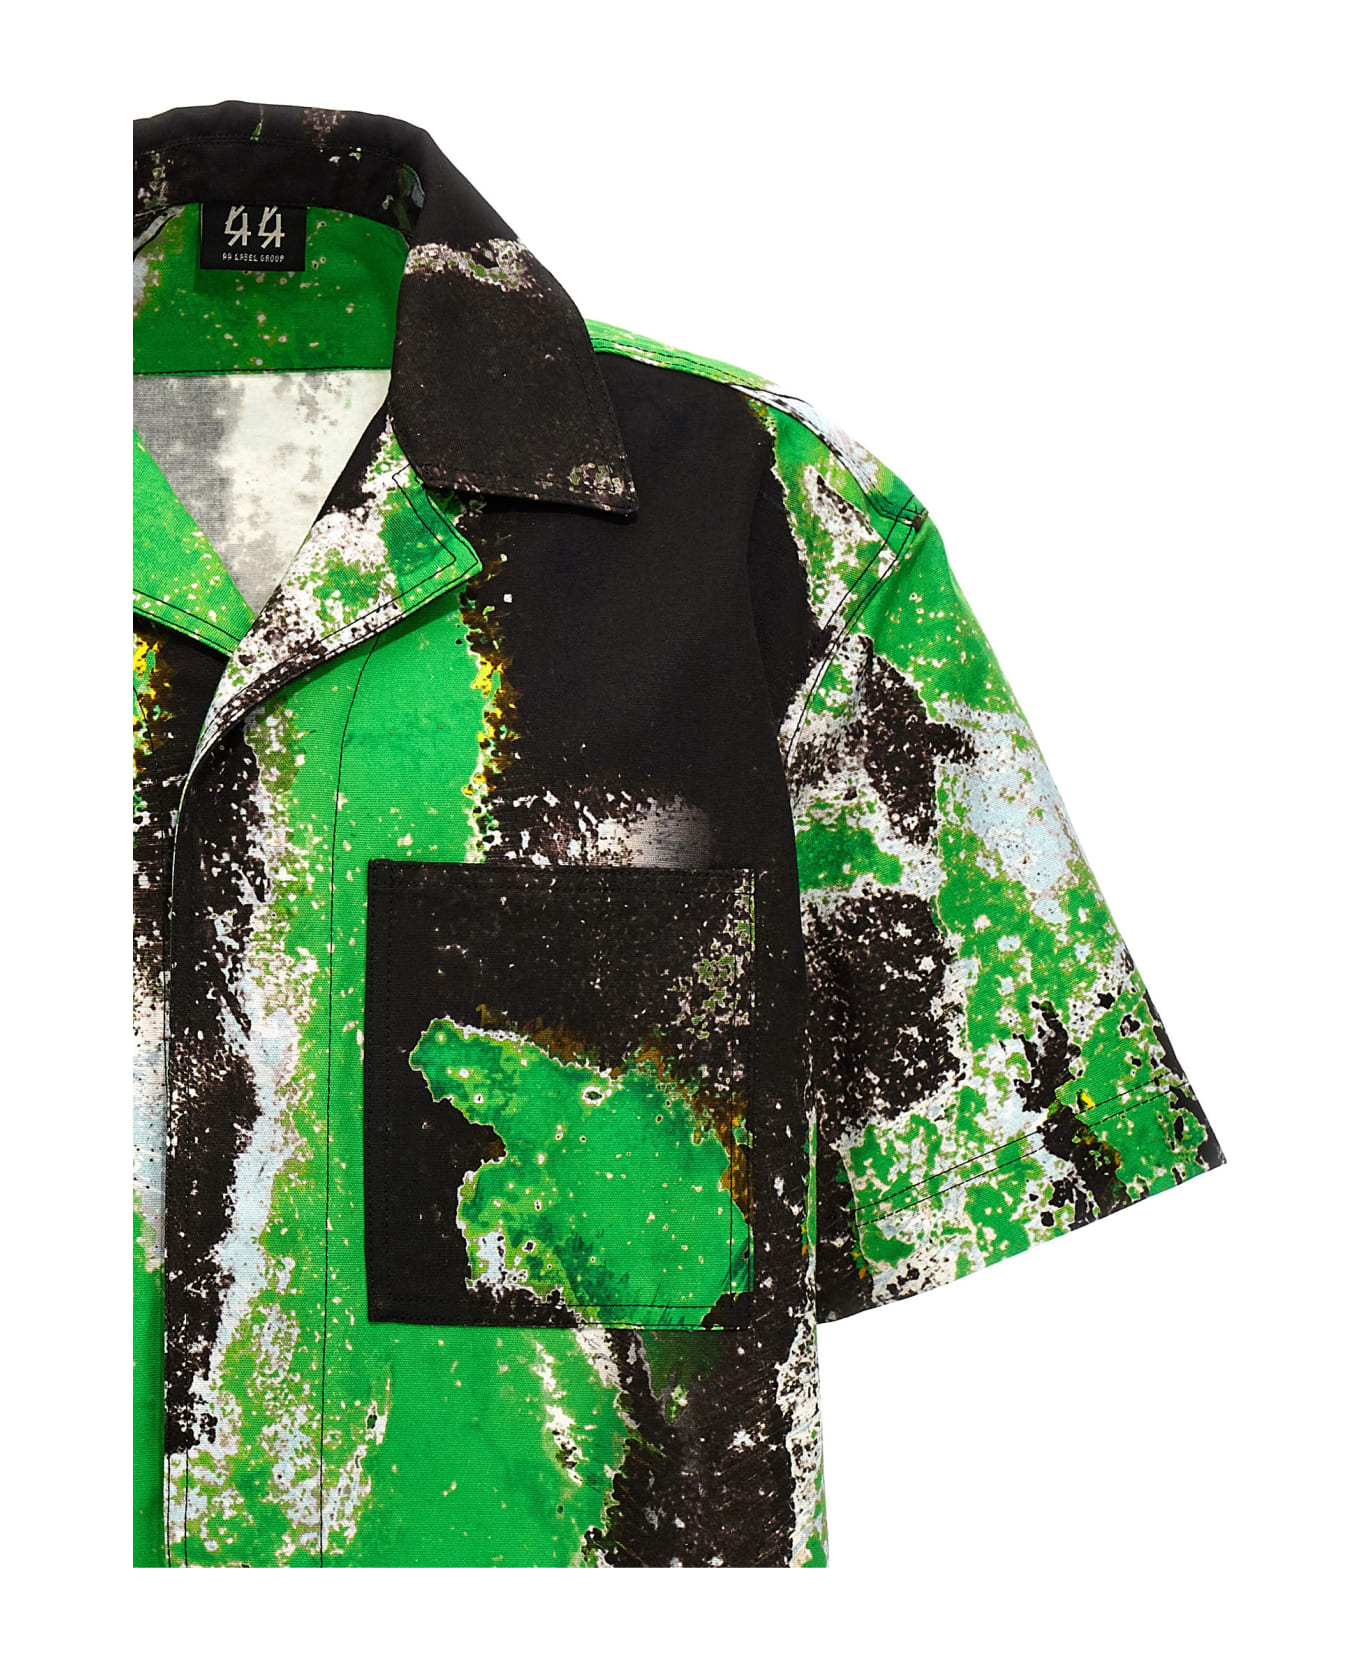 44 Label Group 'corrosive' Shirt - Multicolor シャツ